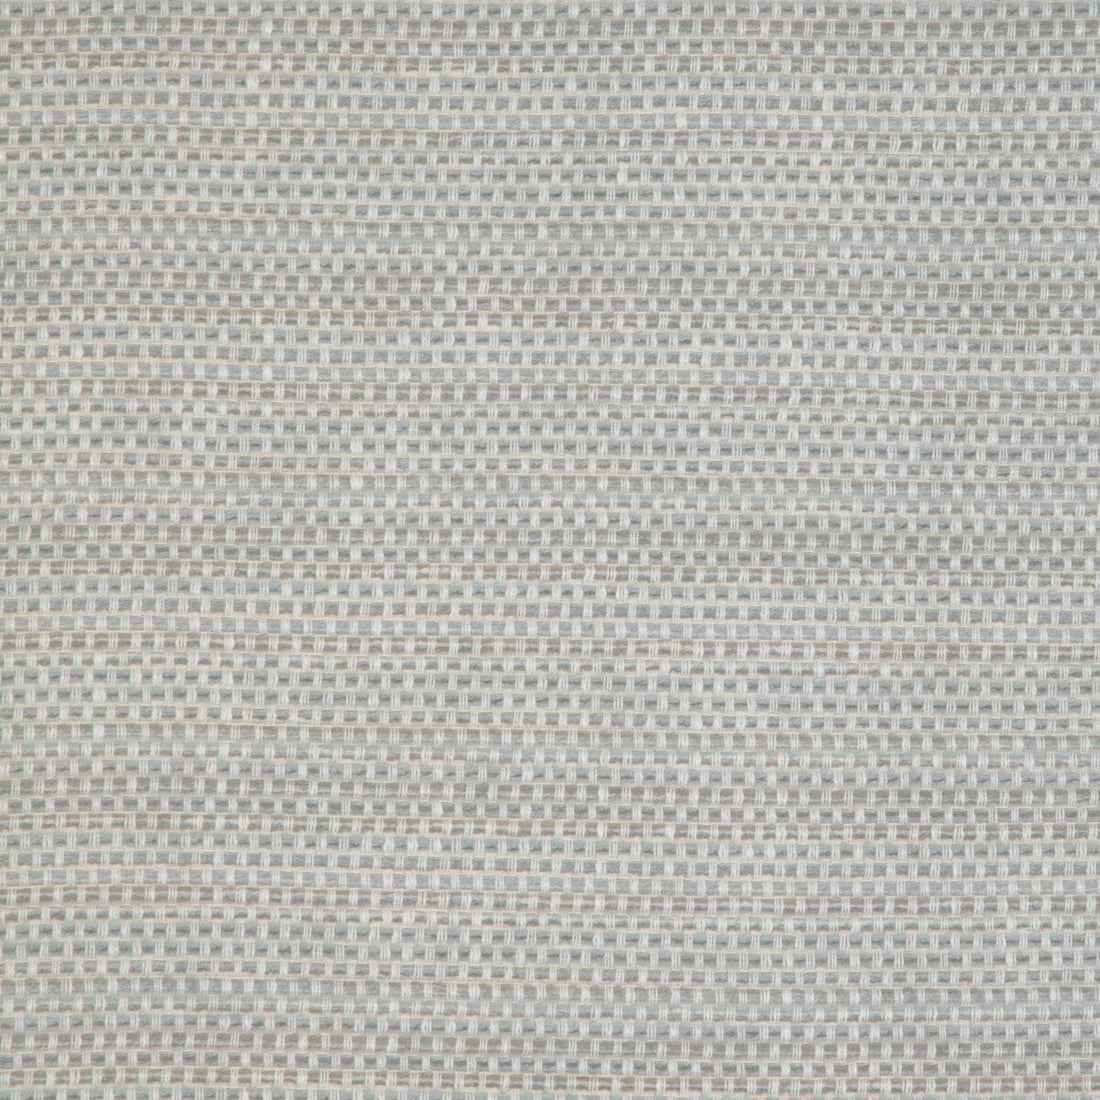 Kravet Smart fabric in 36994-11 color - pattern 36994.11.0 - by Kravet Smart in the Pavilion collection